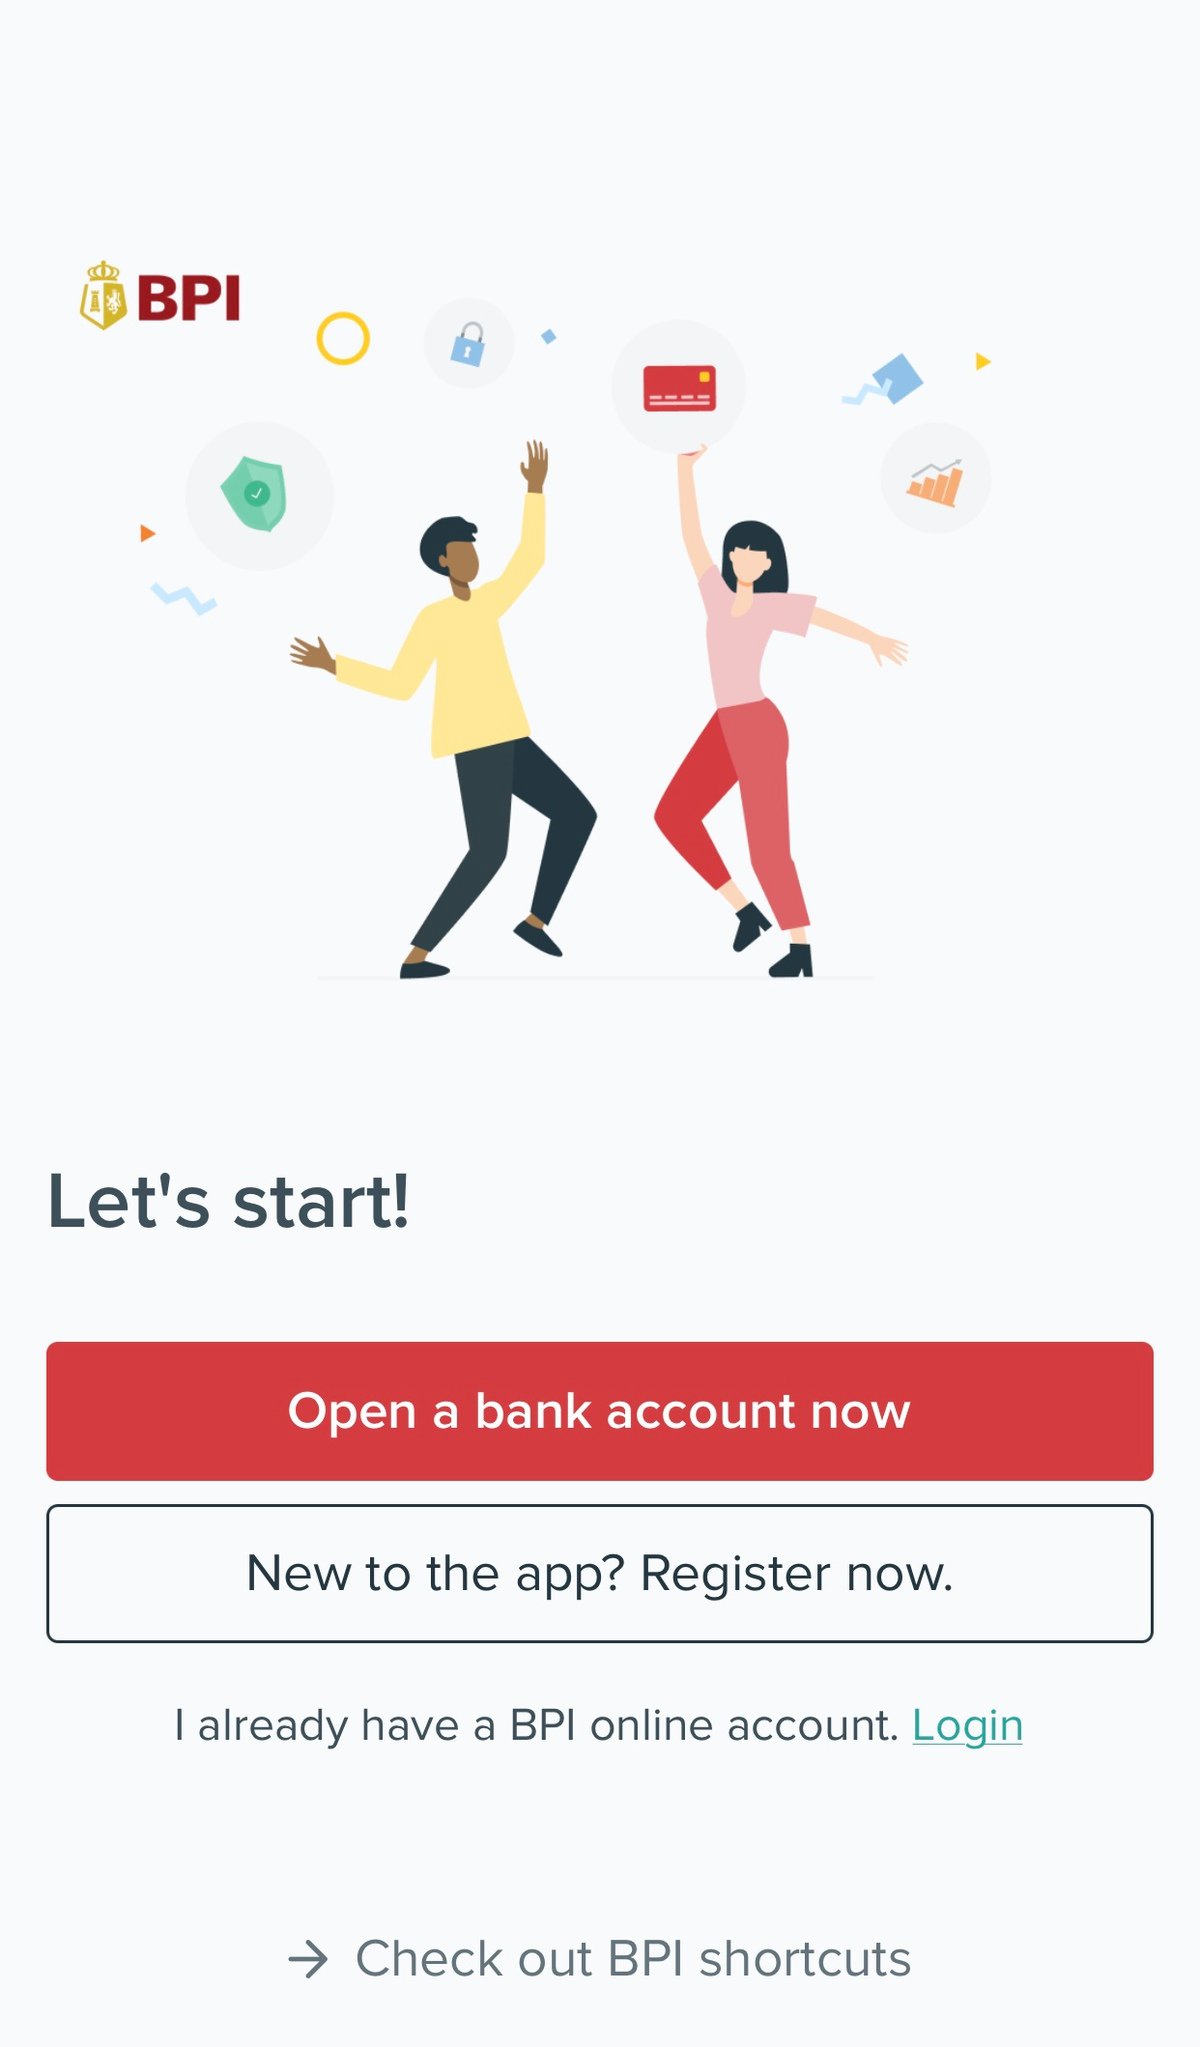 bpi online app - how to register